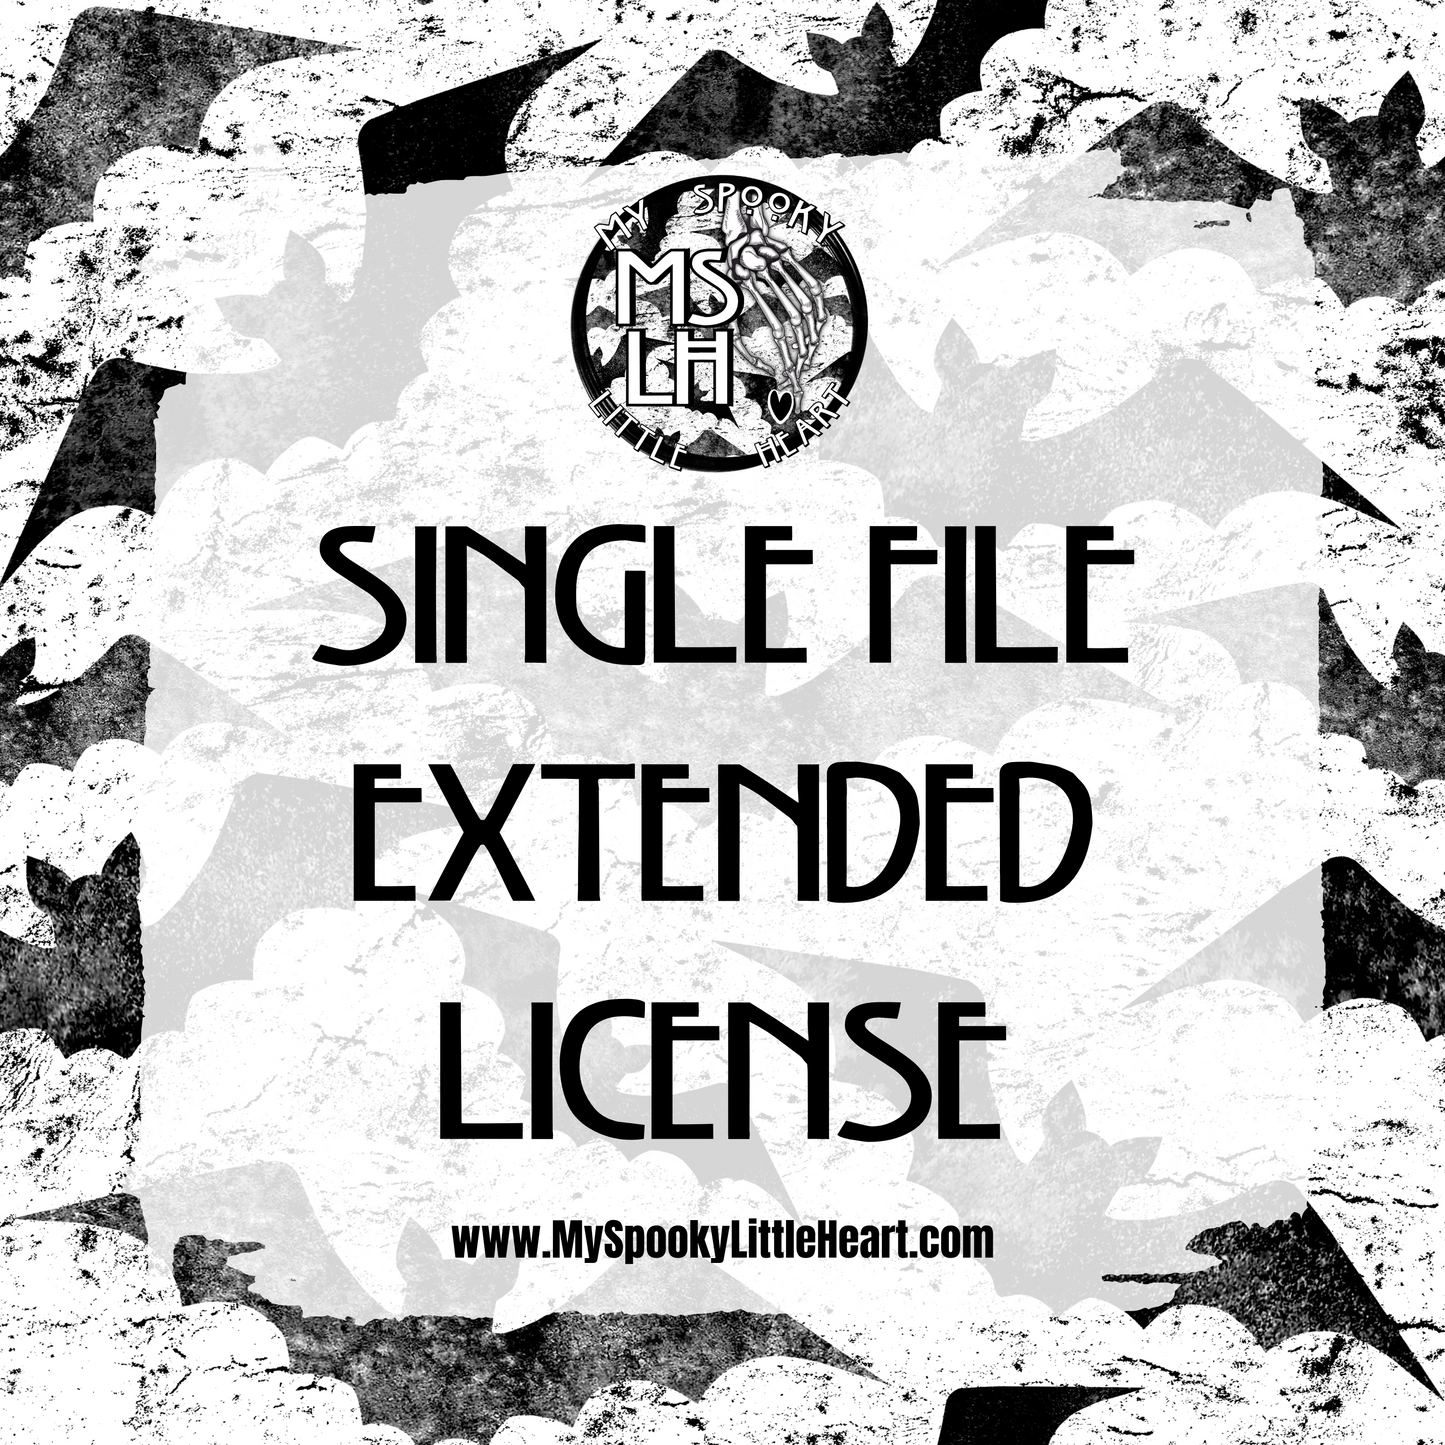 License for ONE SINGLE design